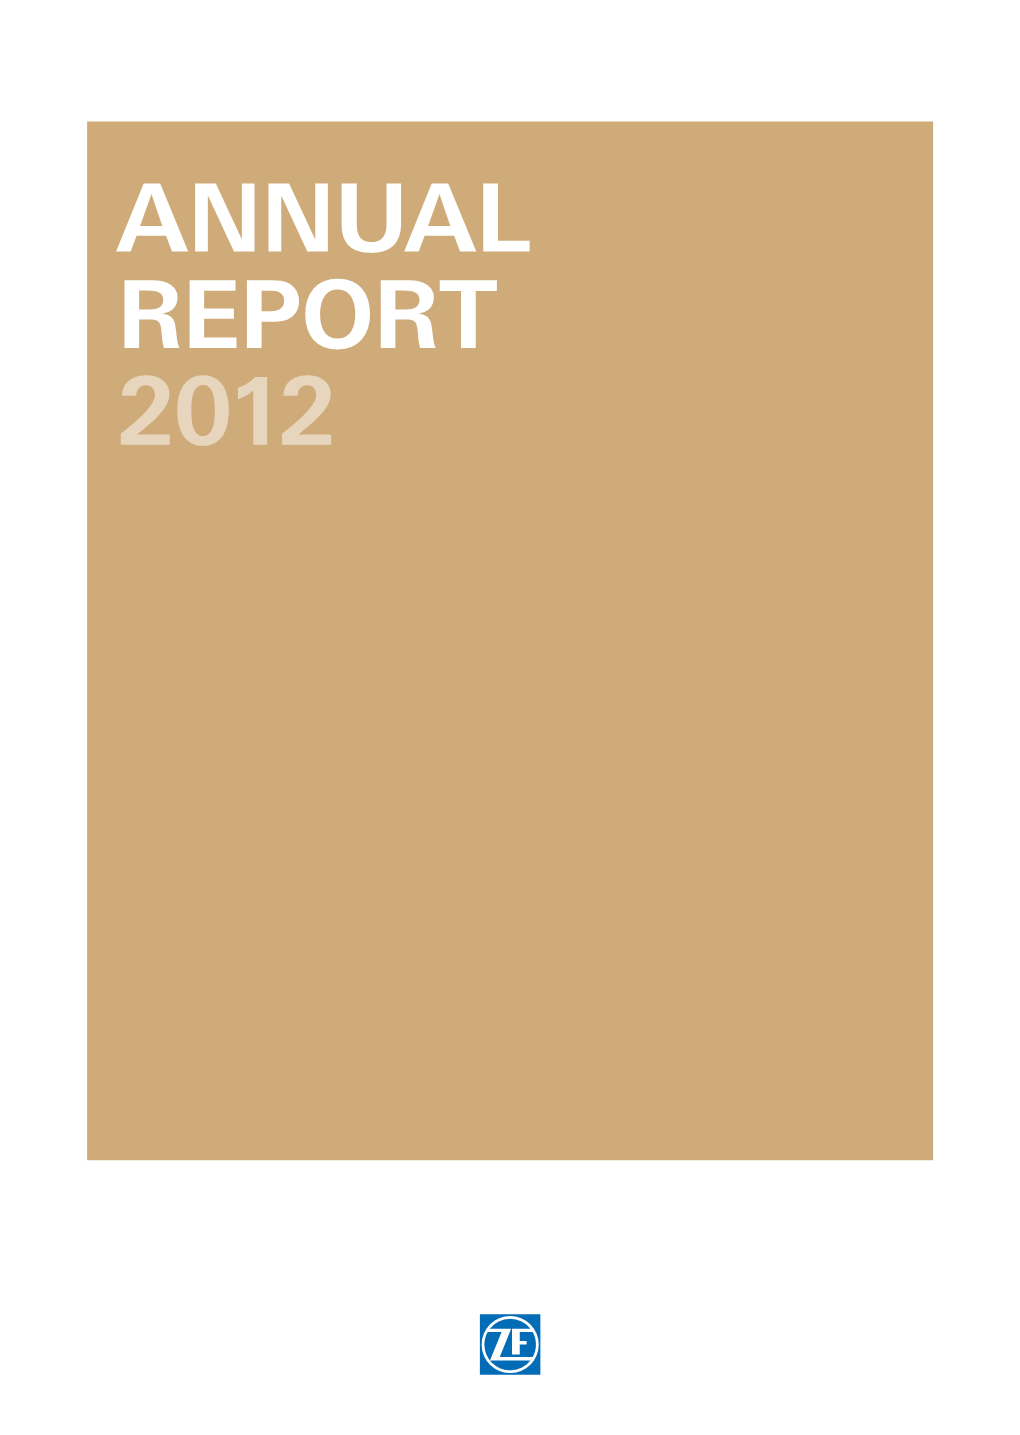 Annual Report 2012 Corporate Statement